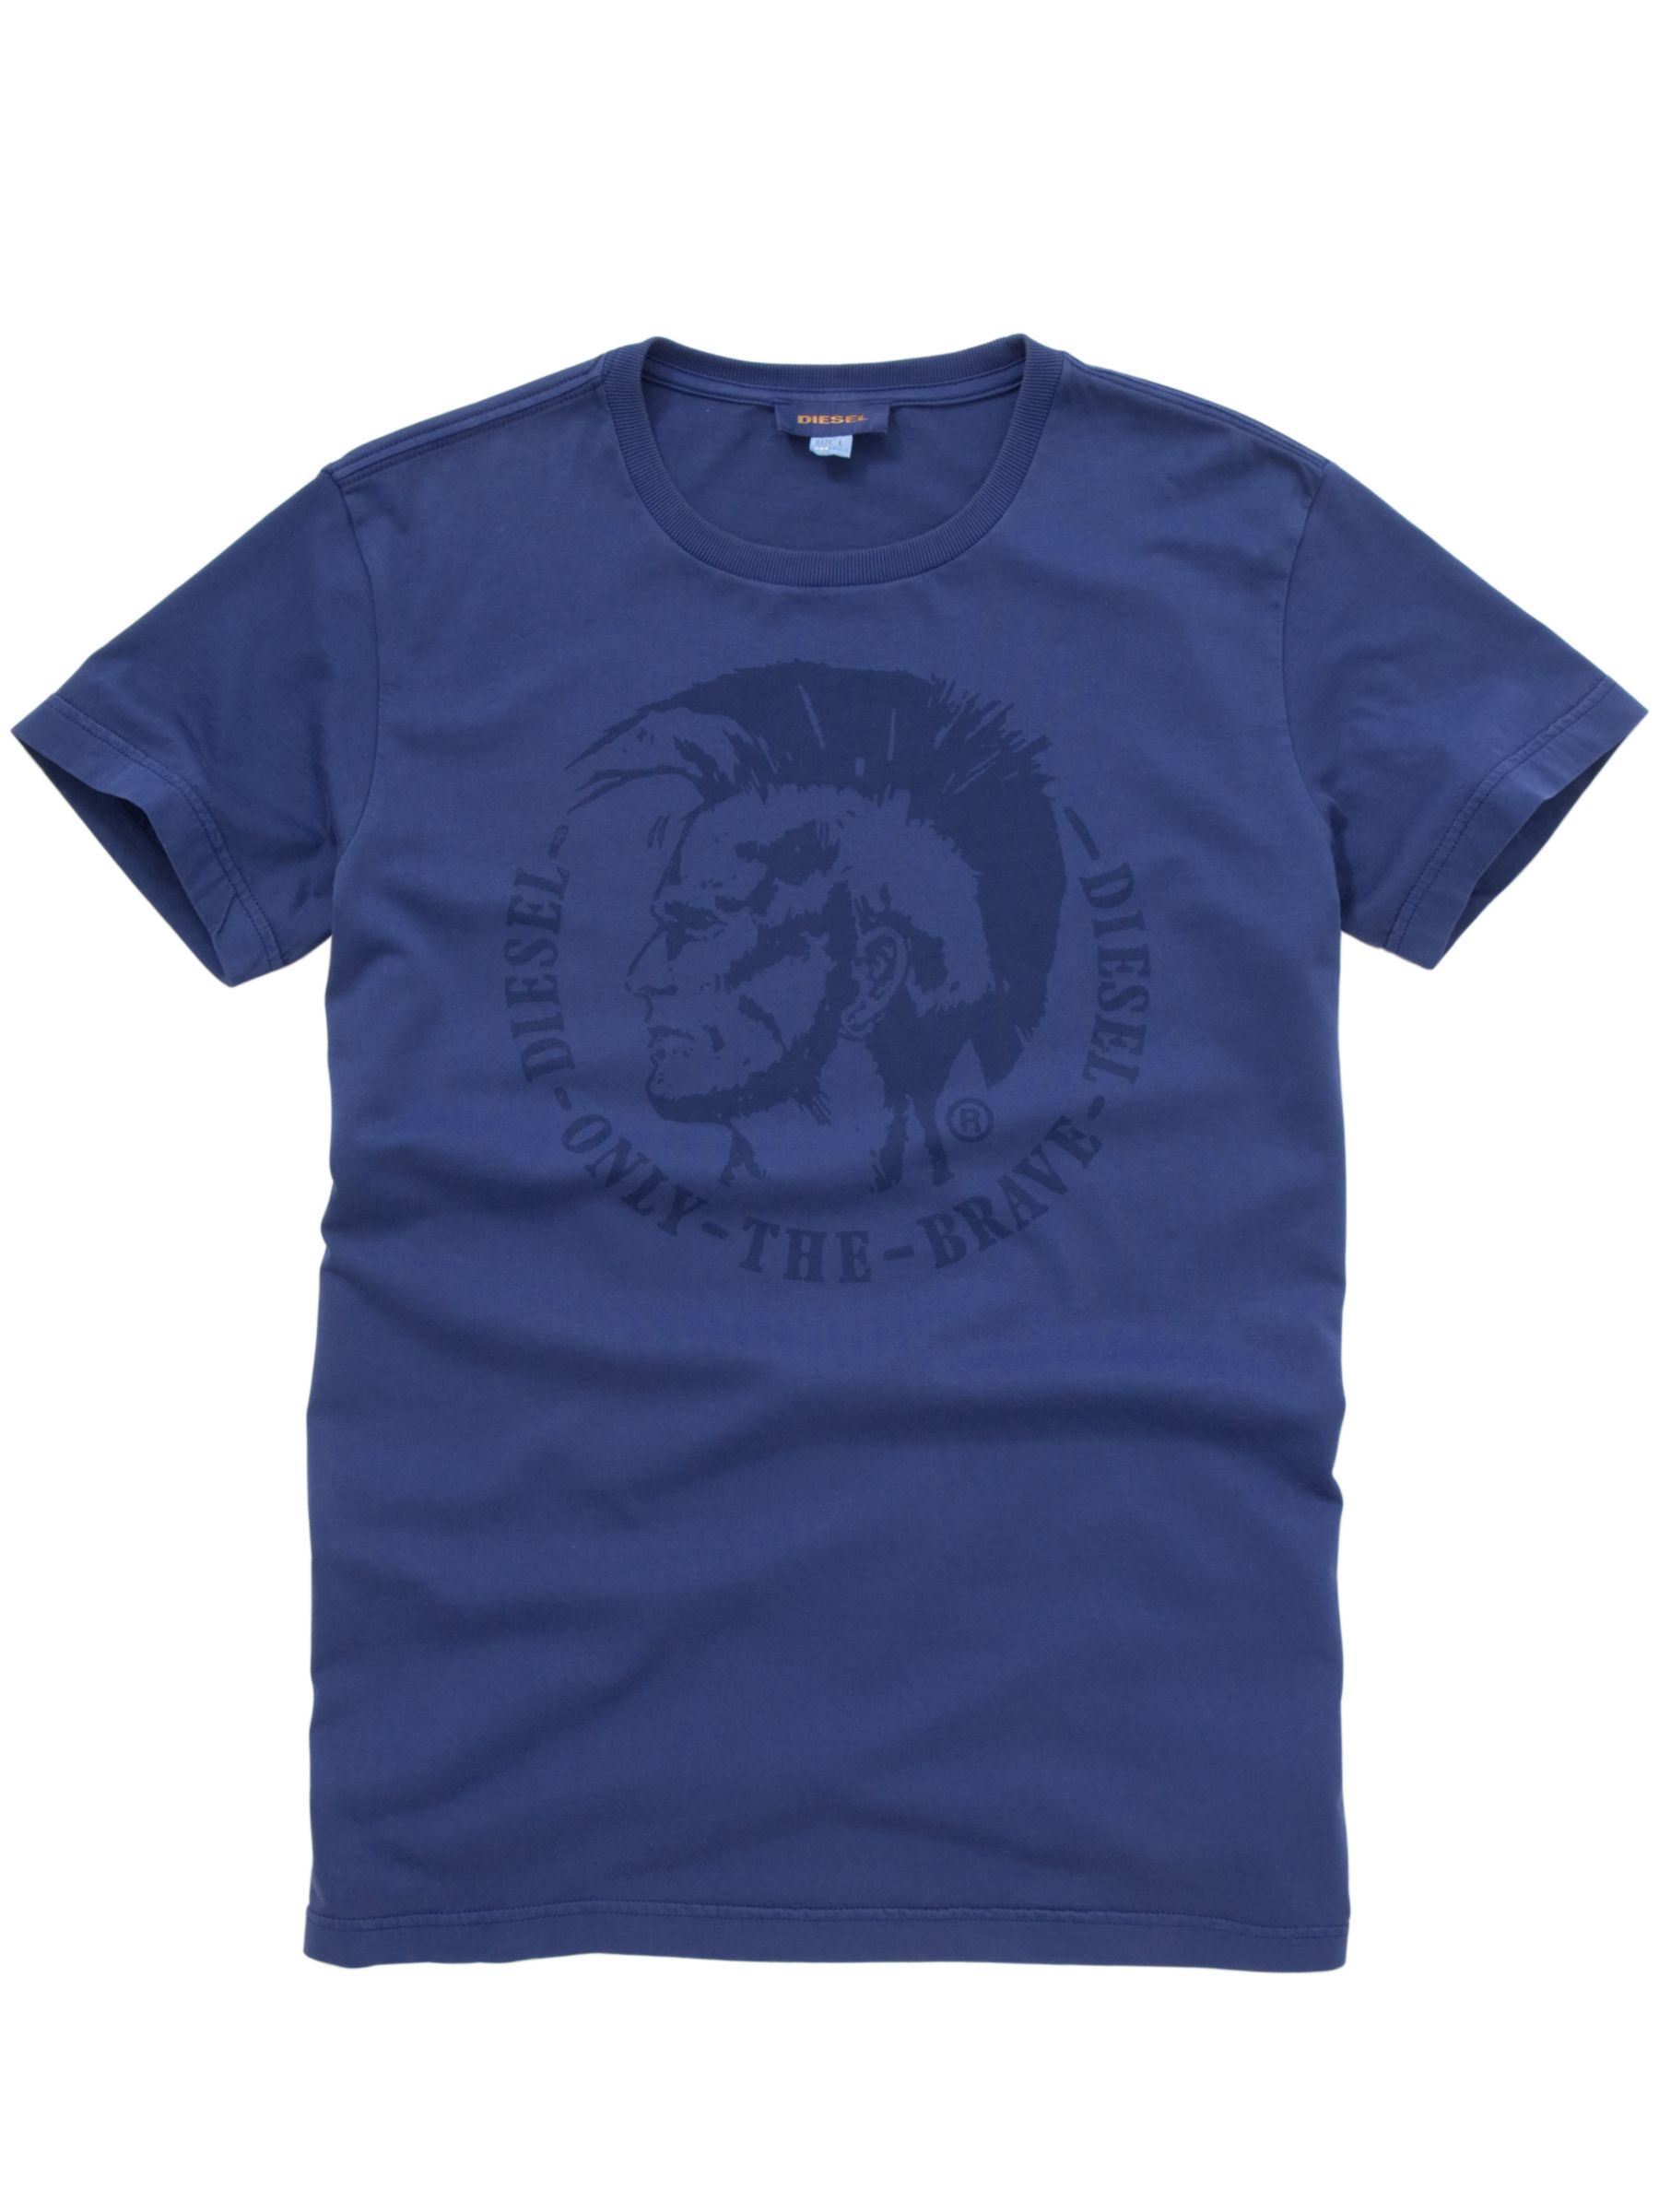 Diesel Nana T-Shirt, Blue